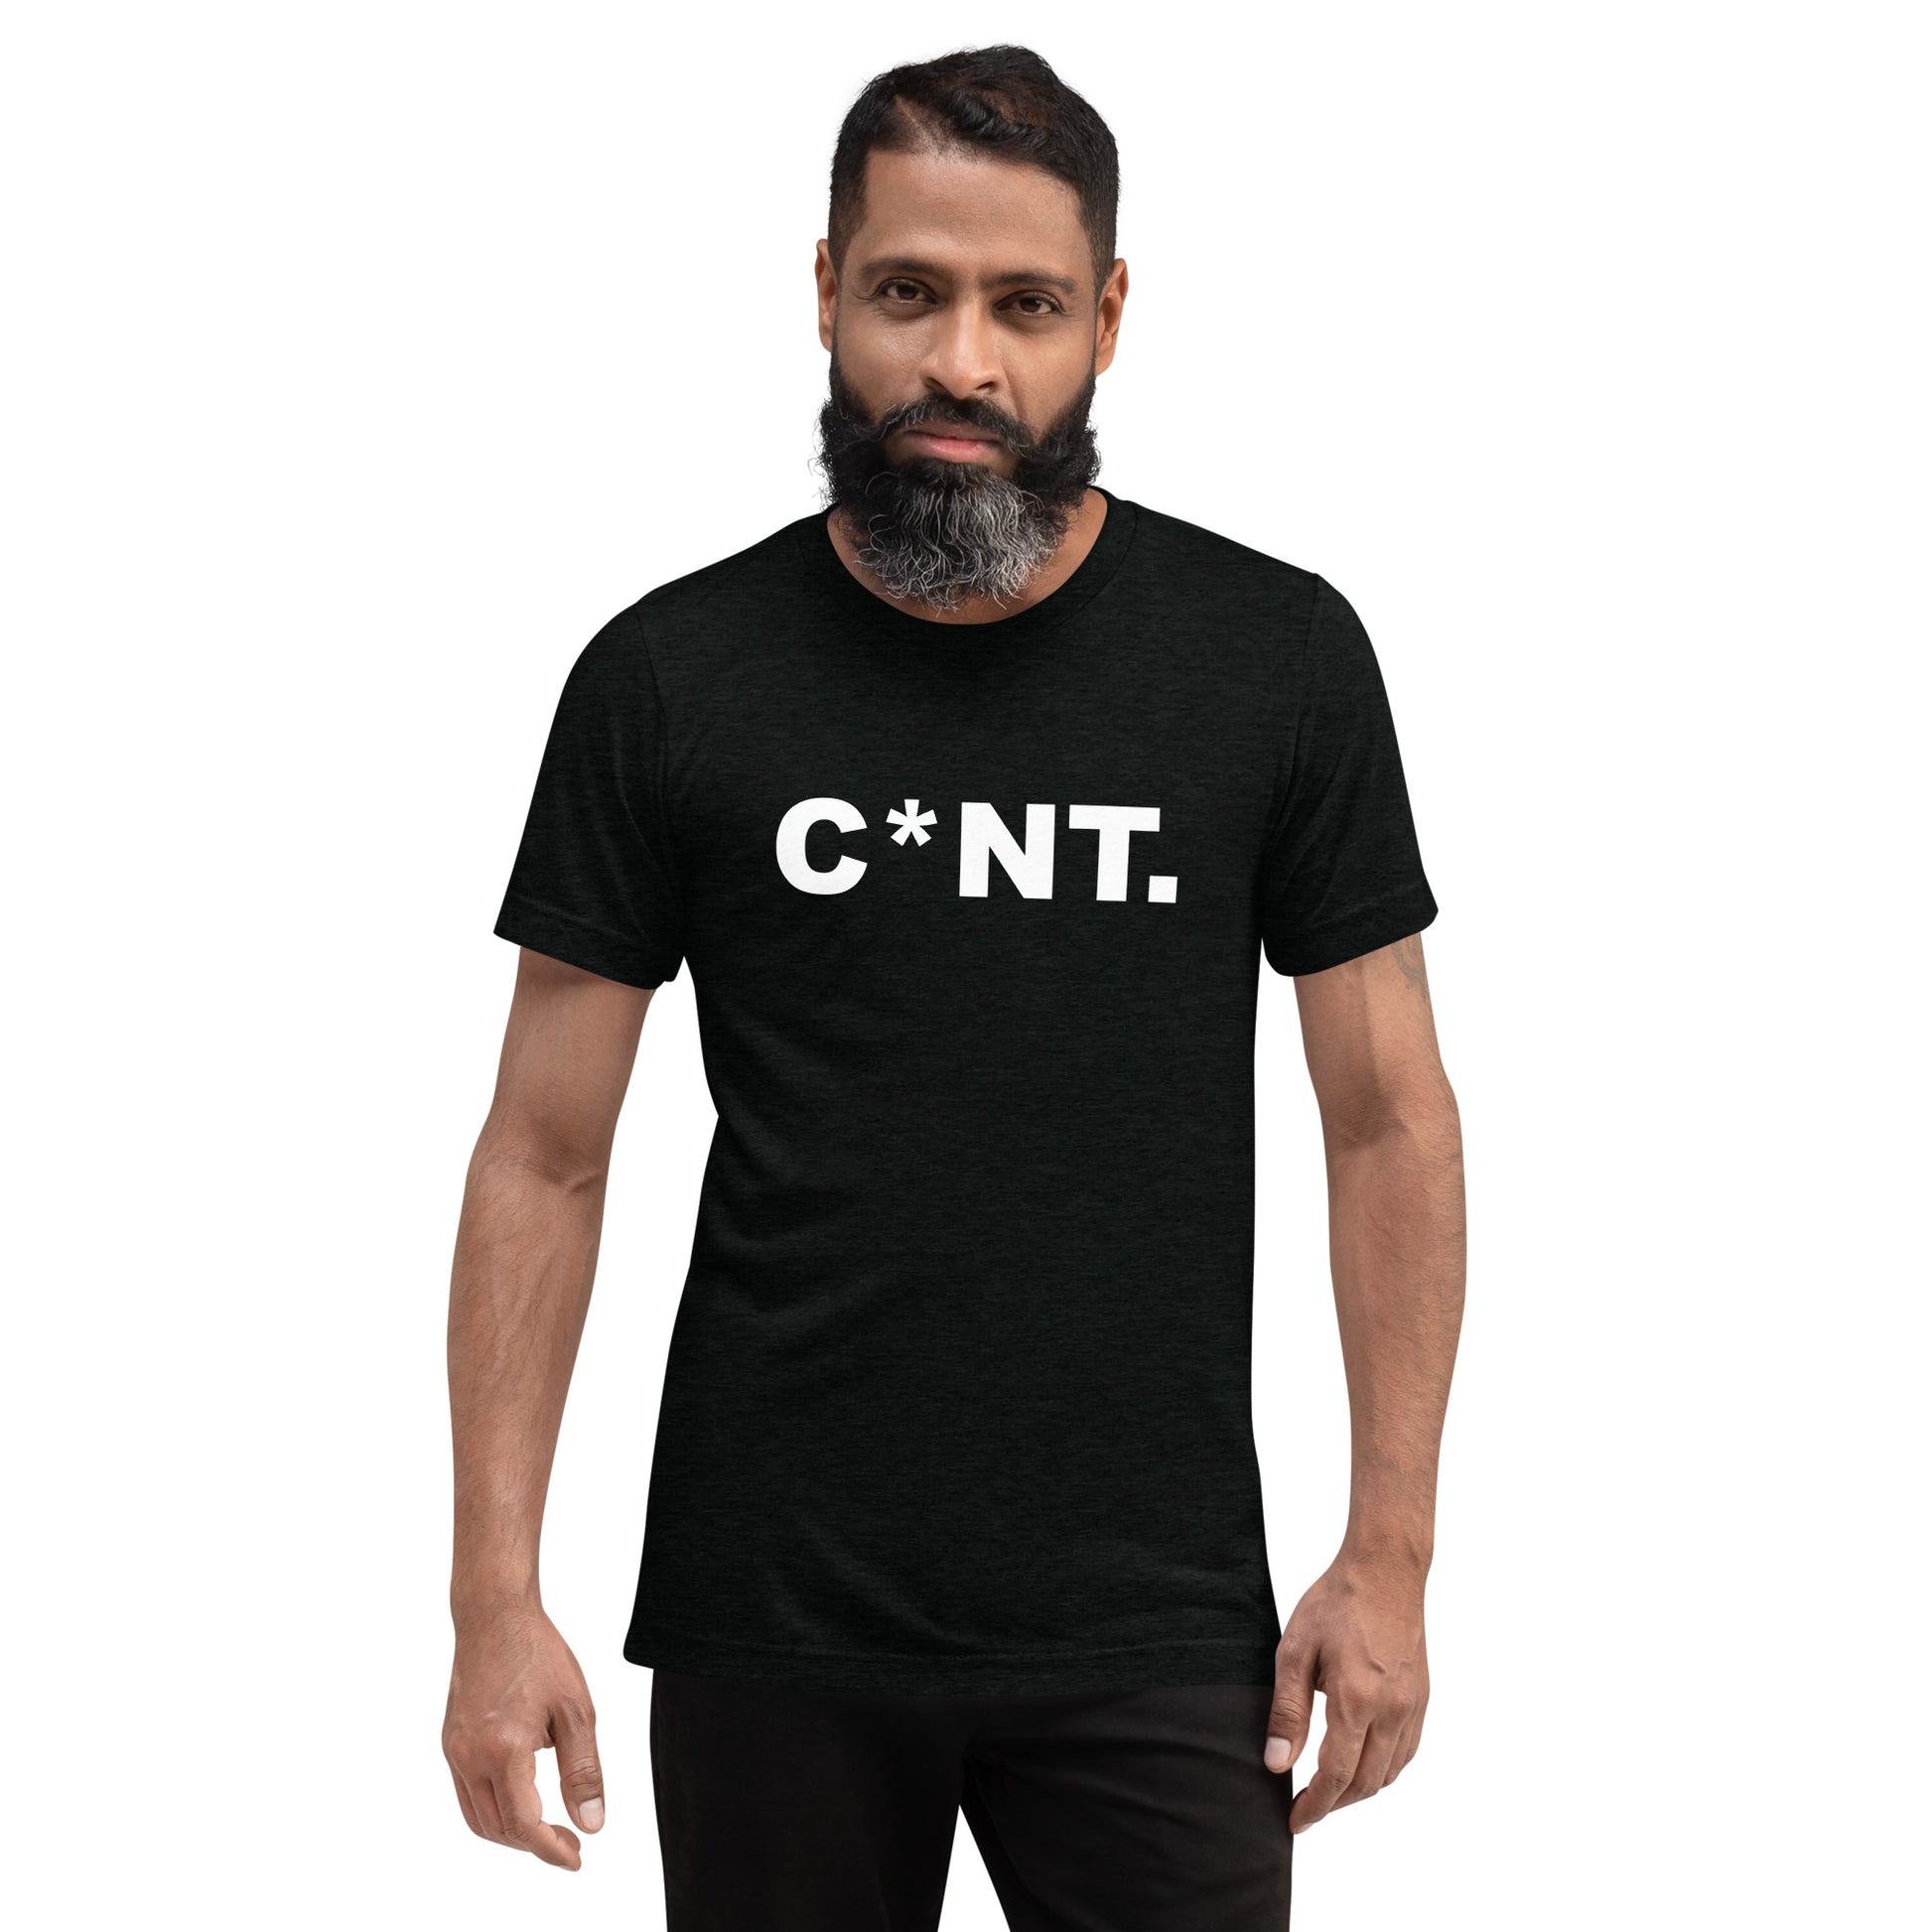 C*NT t-shirt.